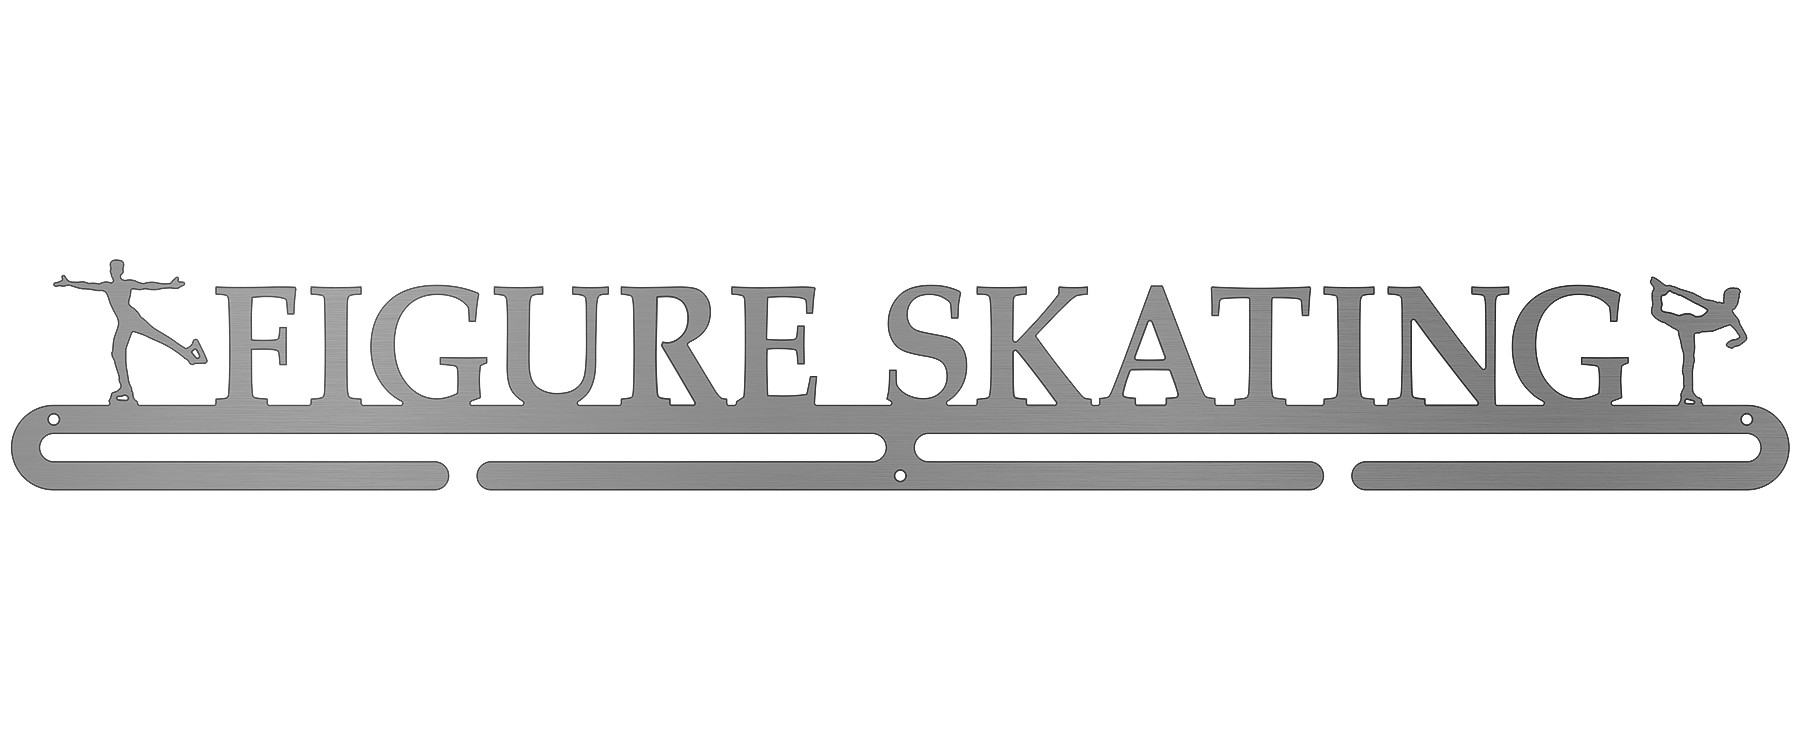 Figure Skating - Male